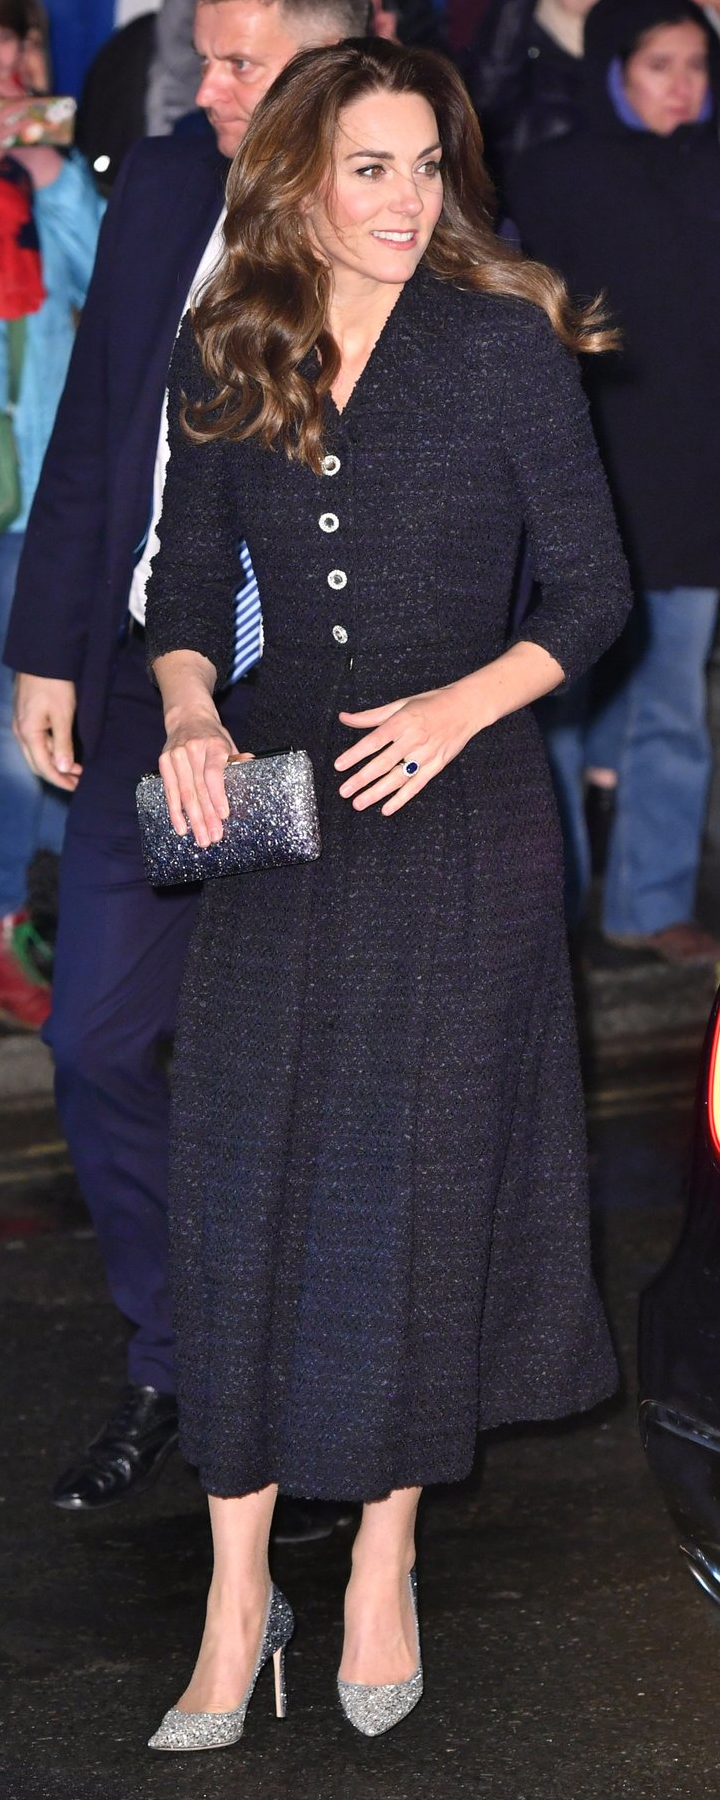 Jimmy Choo Ellipse Navy & Silver Glitter Dégradé Clutch as seen on Kate Middleton, The Duchess of Cambridge.